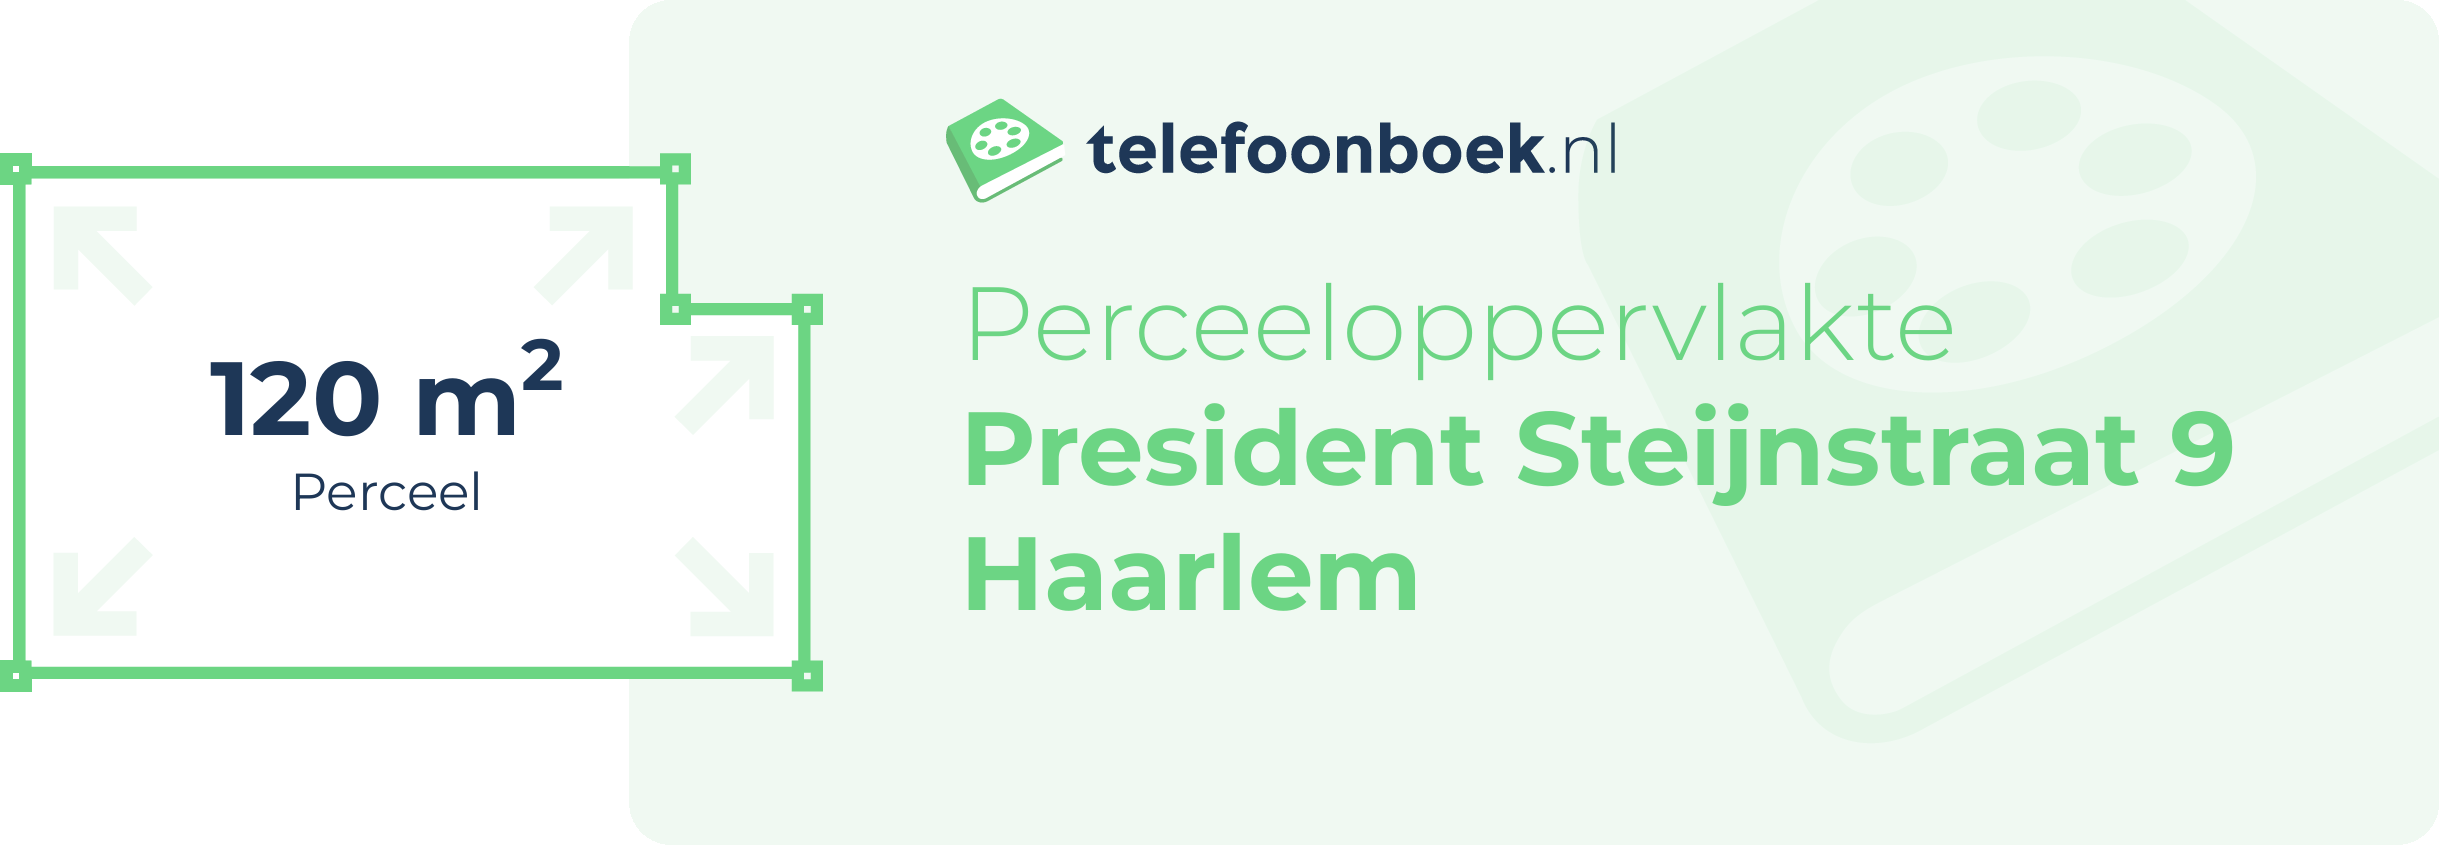 Perceeloppervlakte President Steijnstraat 9 Haarlem